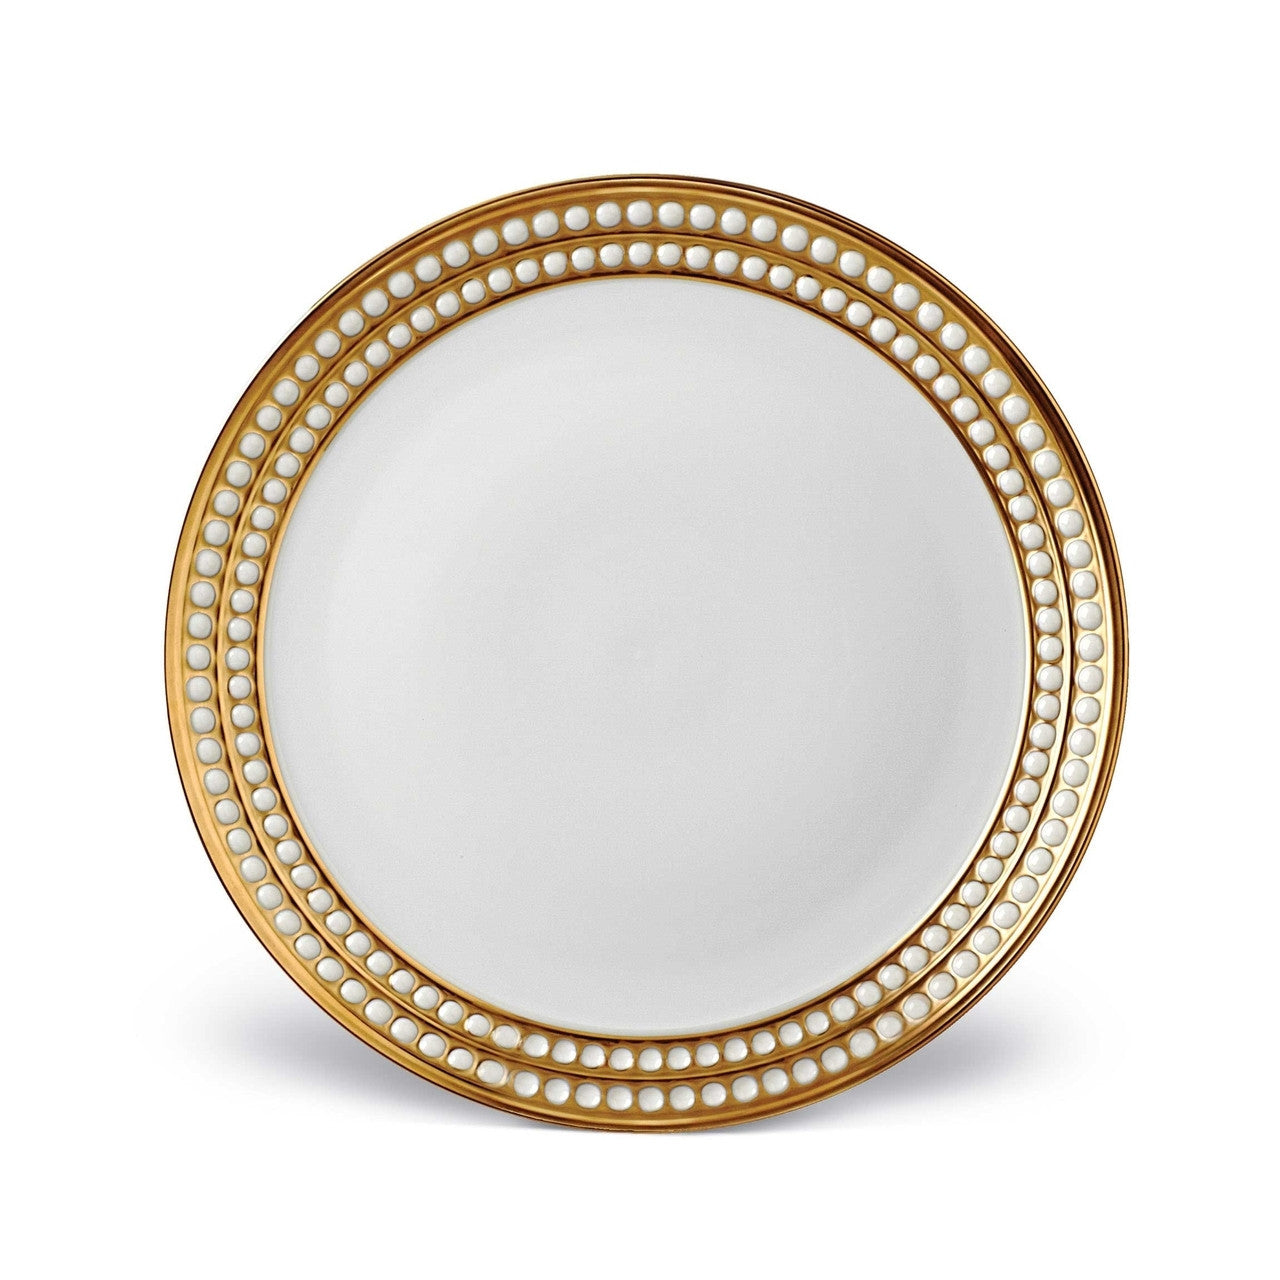 Perlee Gold Dinner Plate - RSVP Style